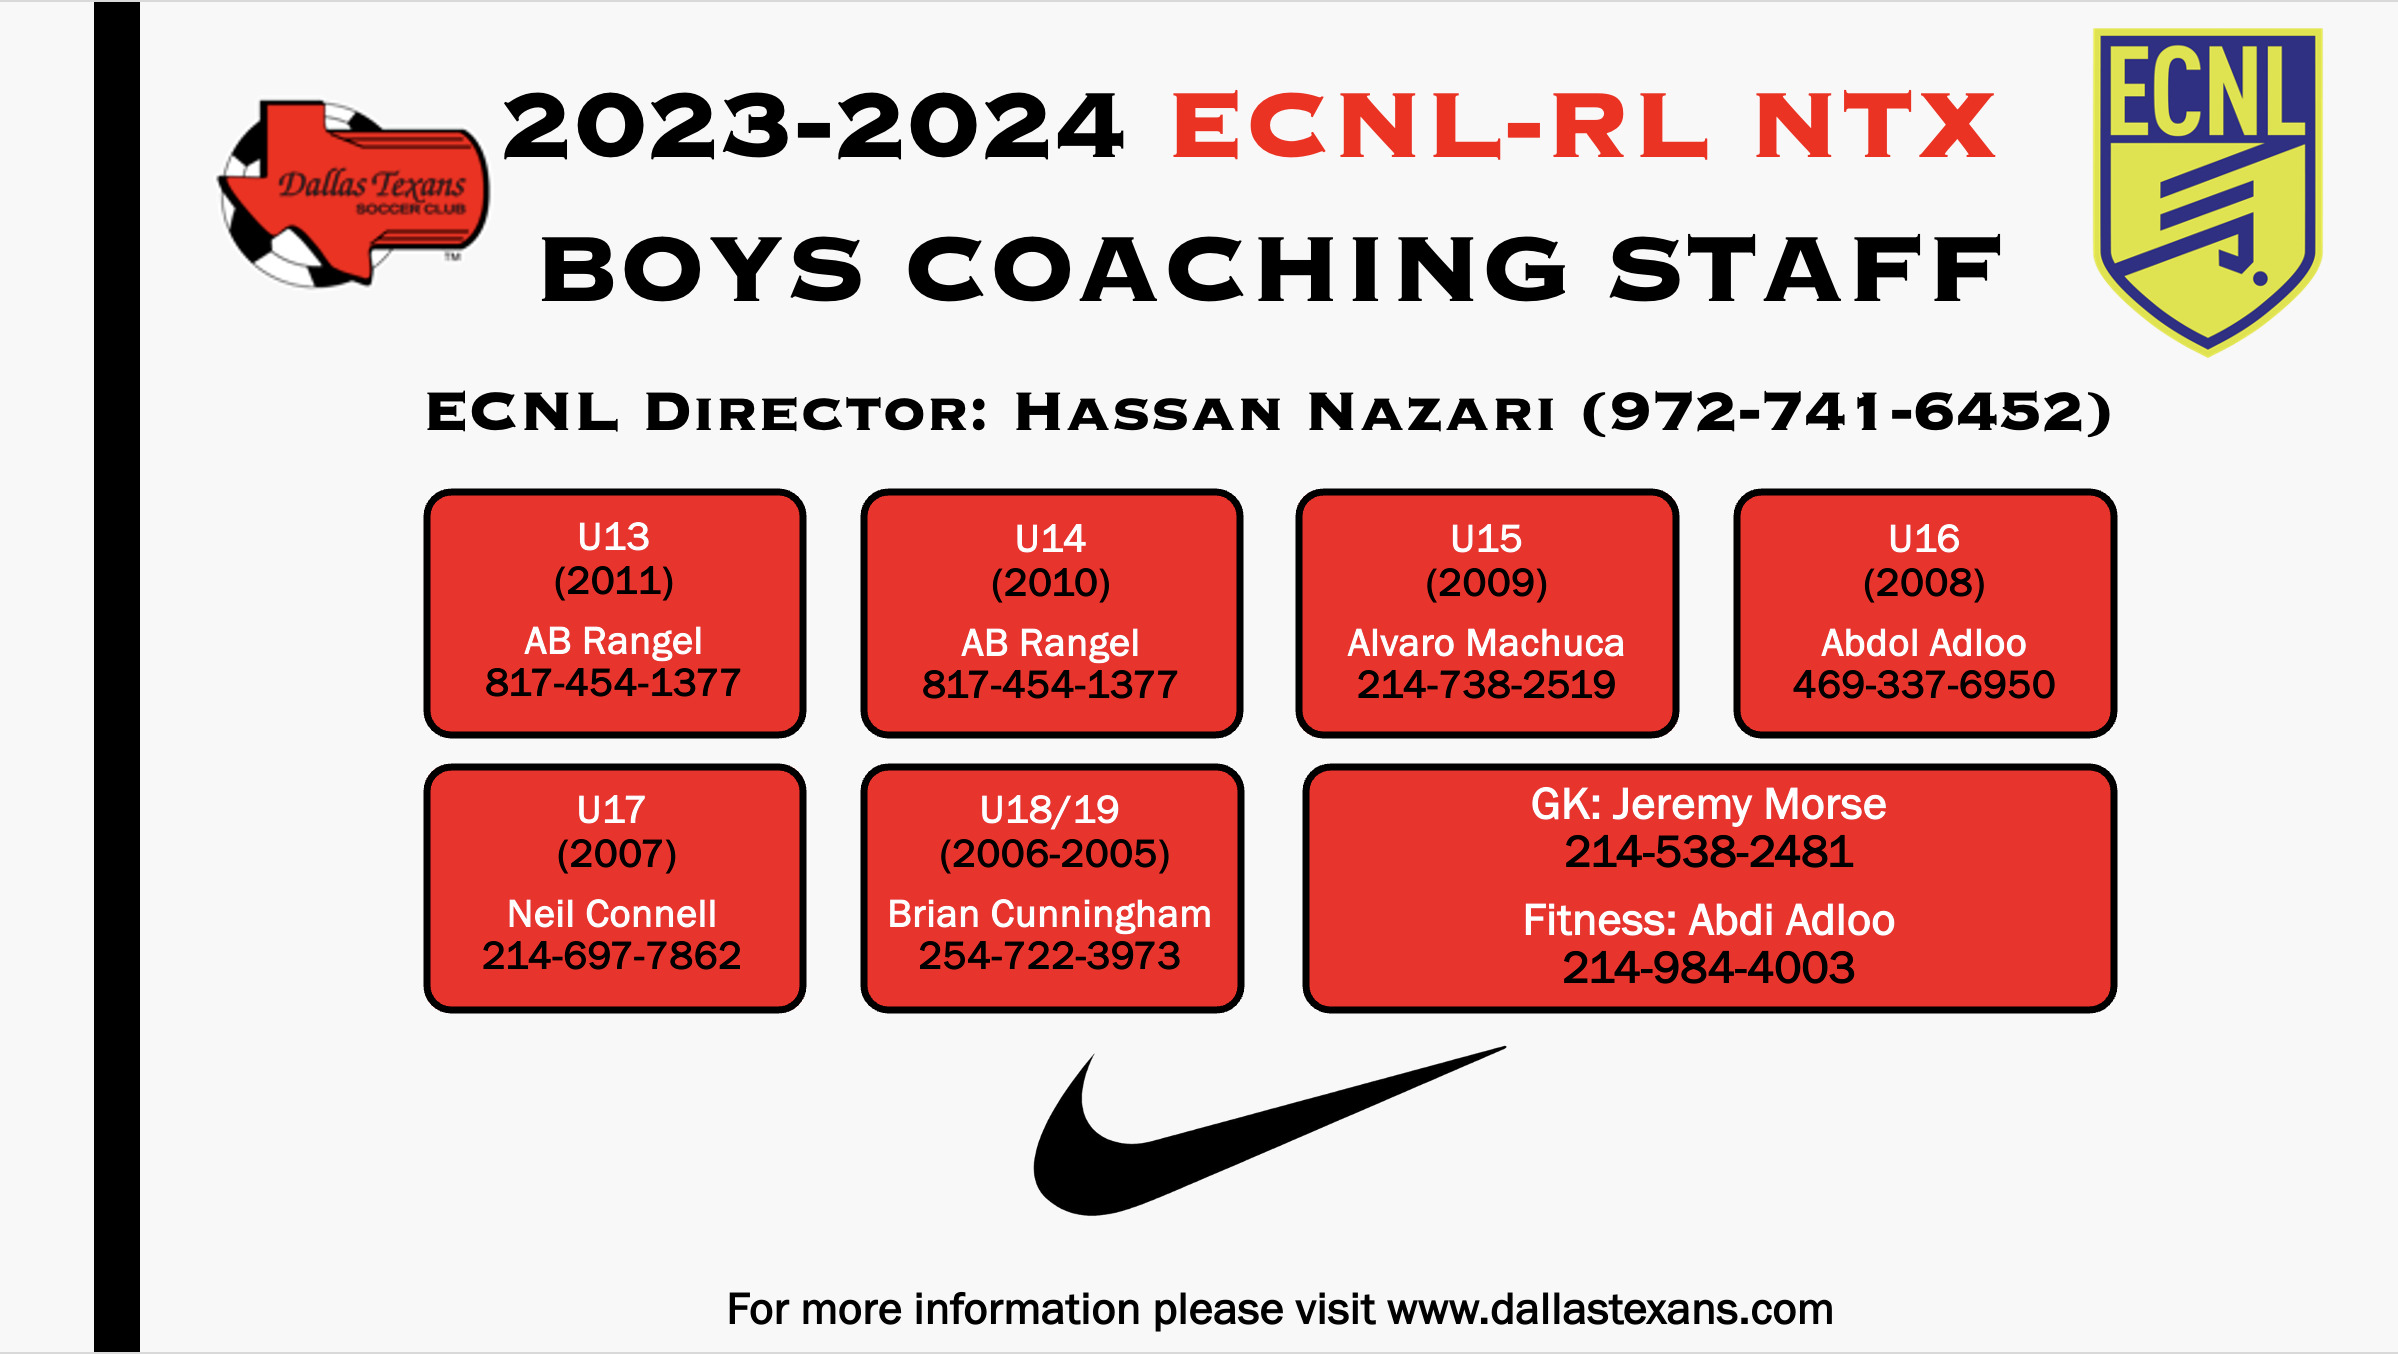 ECNL-RL NTX Boys